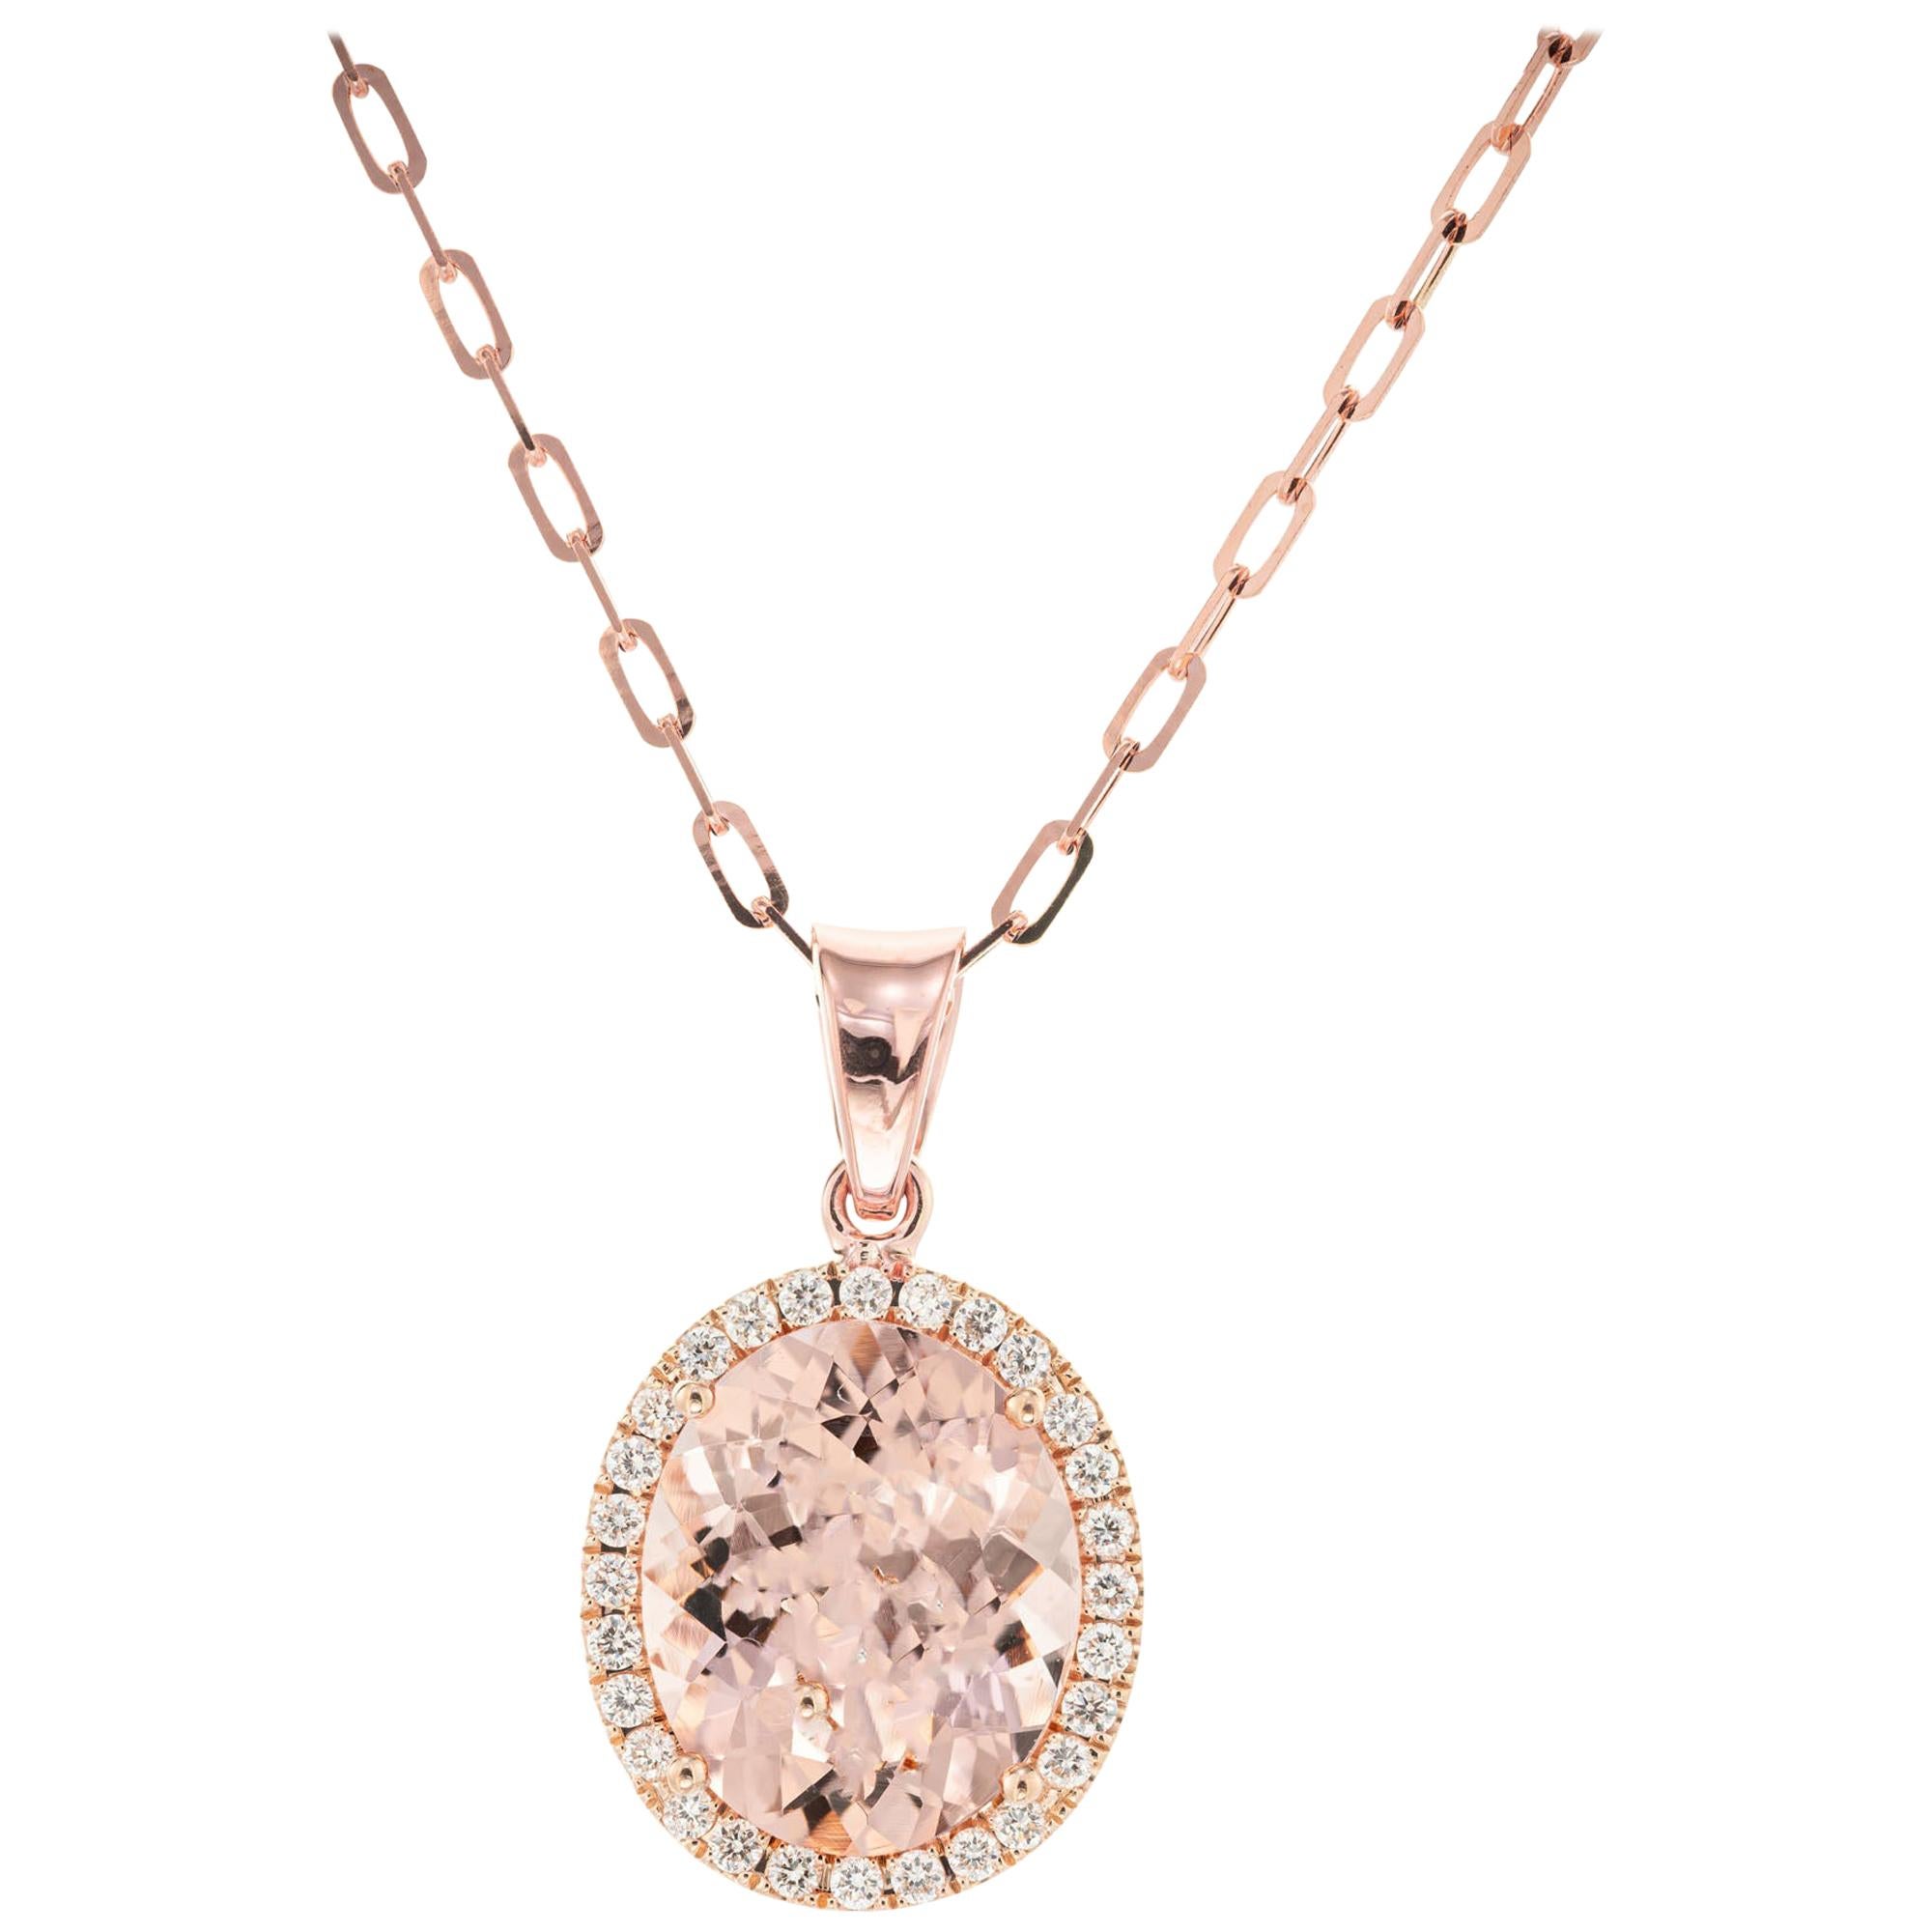 Peter Suchy 2.71 Carat Morgnite Diamond Rose Gold Pendant Necklace